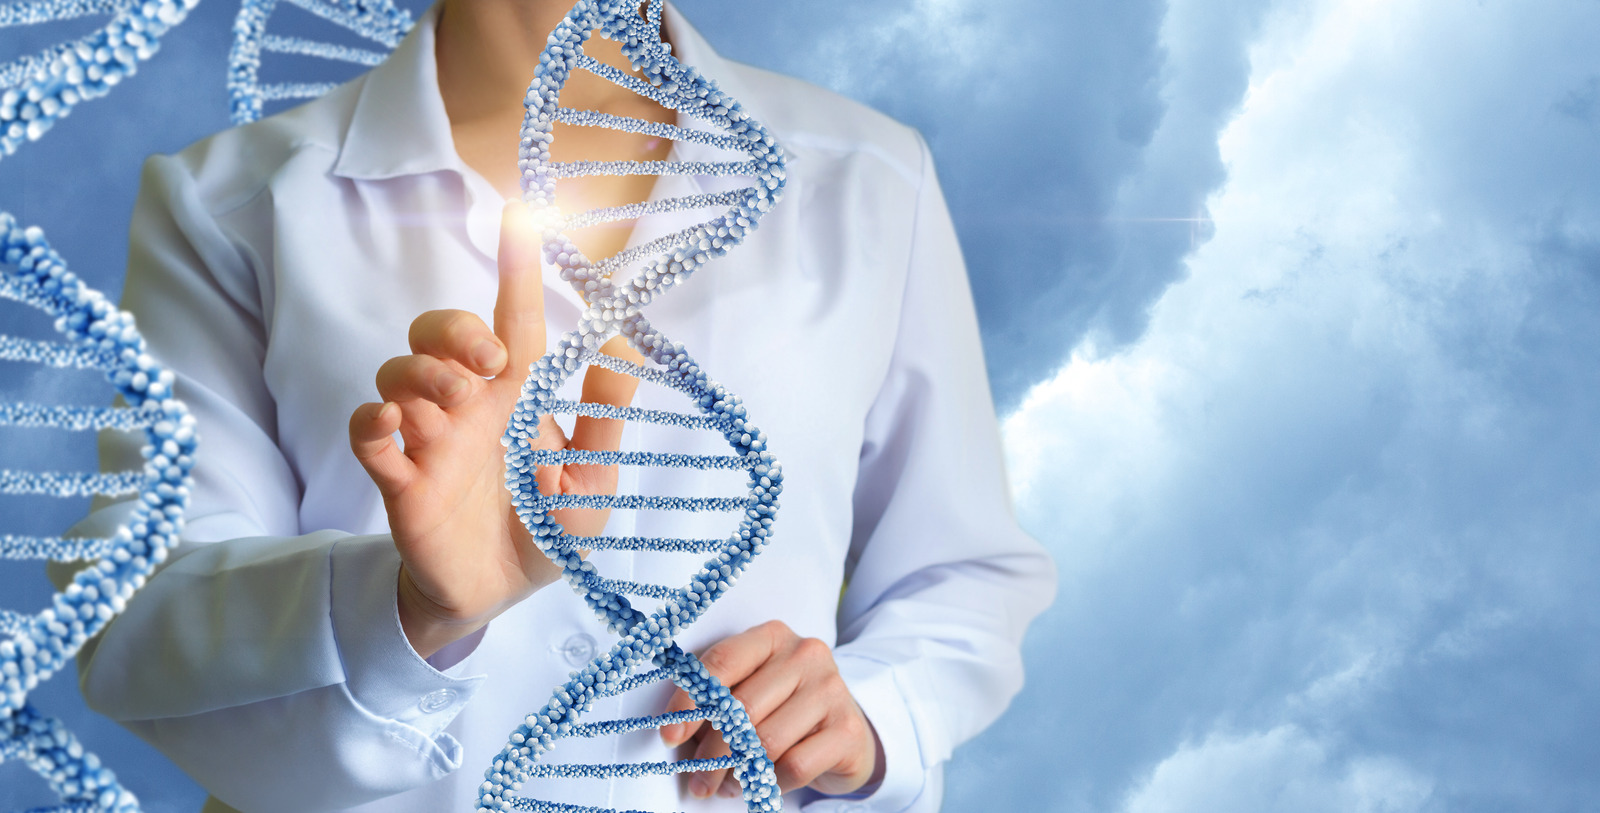 EXPLORING DNA FOR HUMAN BENEFITS